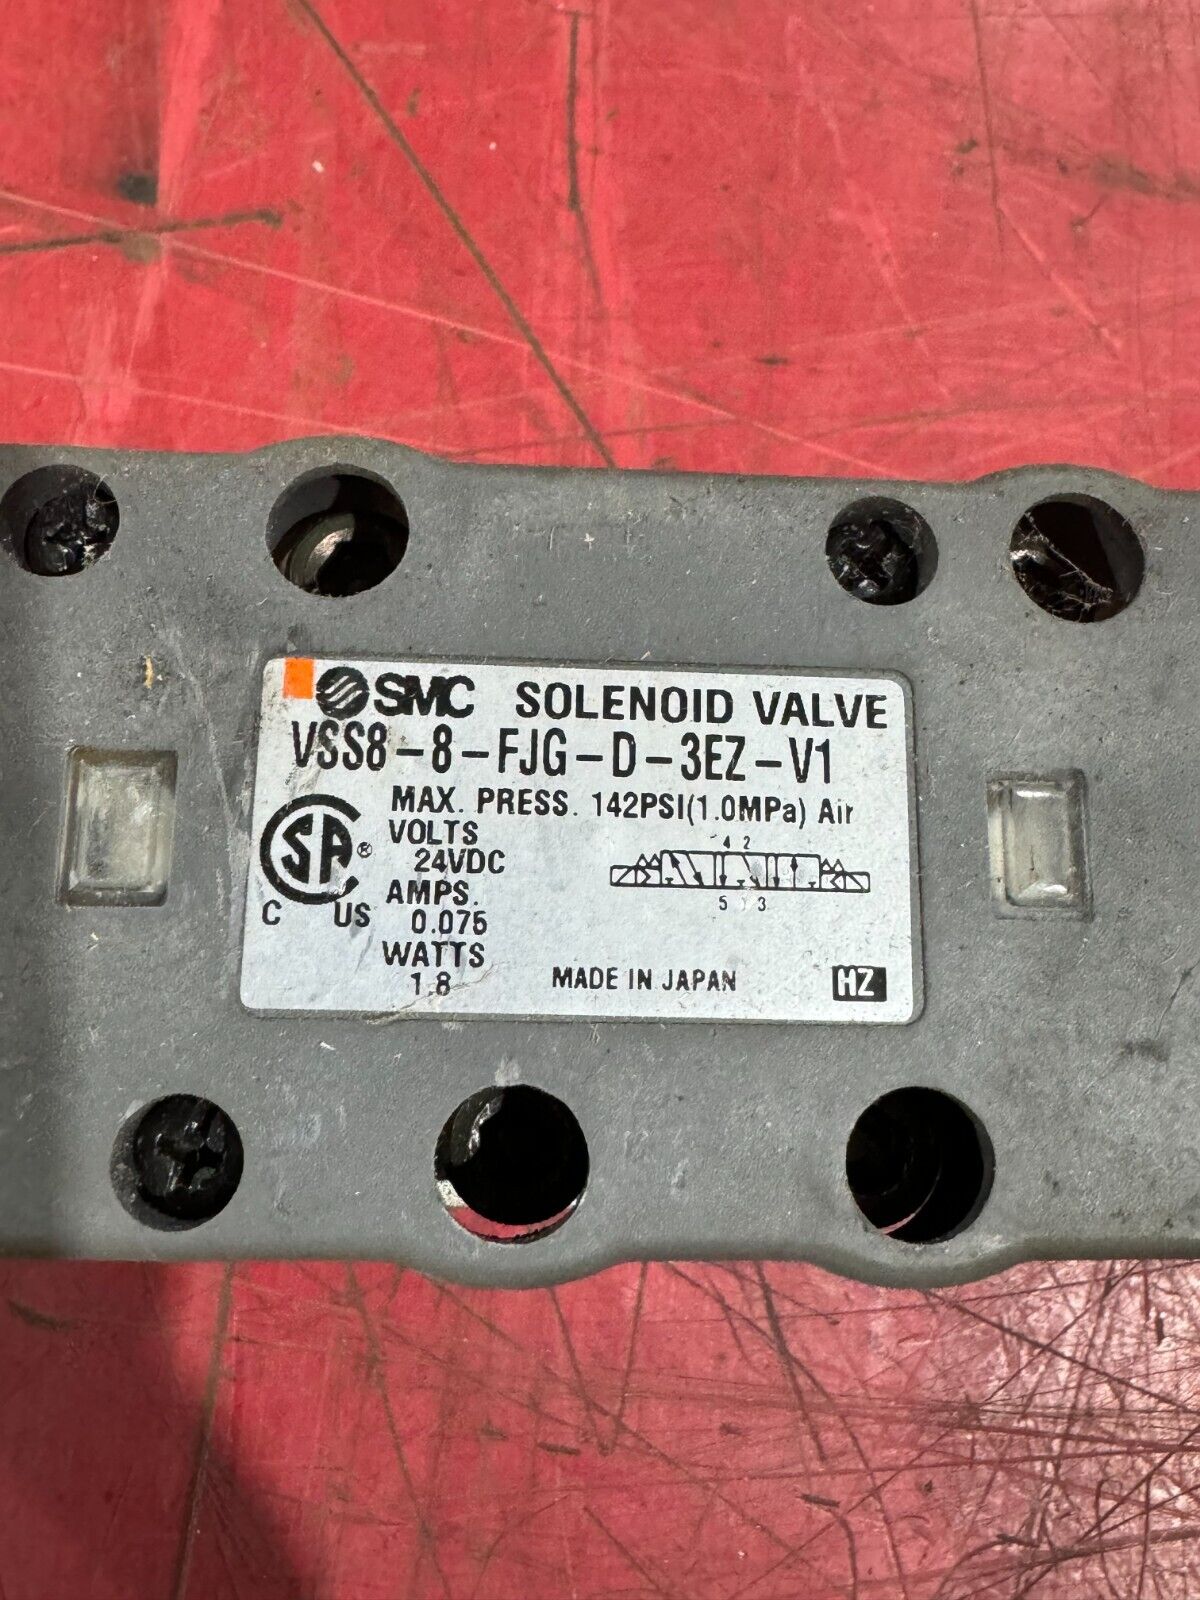 USED SMC SOLENOID VALVE VSS8-8-FJG-D-3EZ-V1